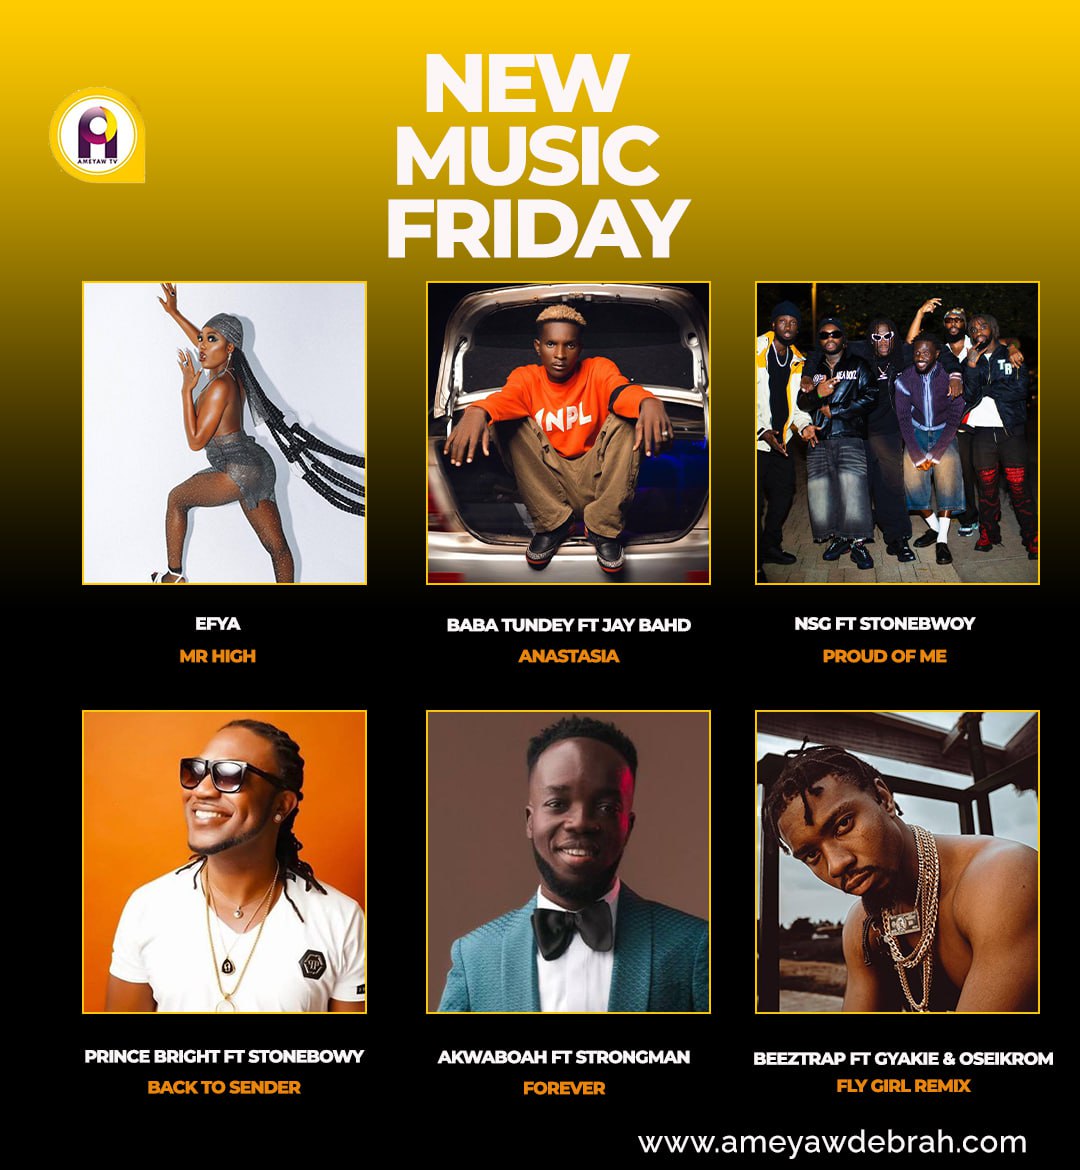 #NewMusicFriday: Here are some of the latest Ghanaian tracks to add to your playlist!

Cc: @EFYA_Nokturnal @baba_tundey_ @nsg_music
@princybright @akwaboahmusic
@beeztrapkotm

#Updateyourplaylist
#ameyawtv